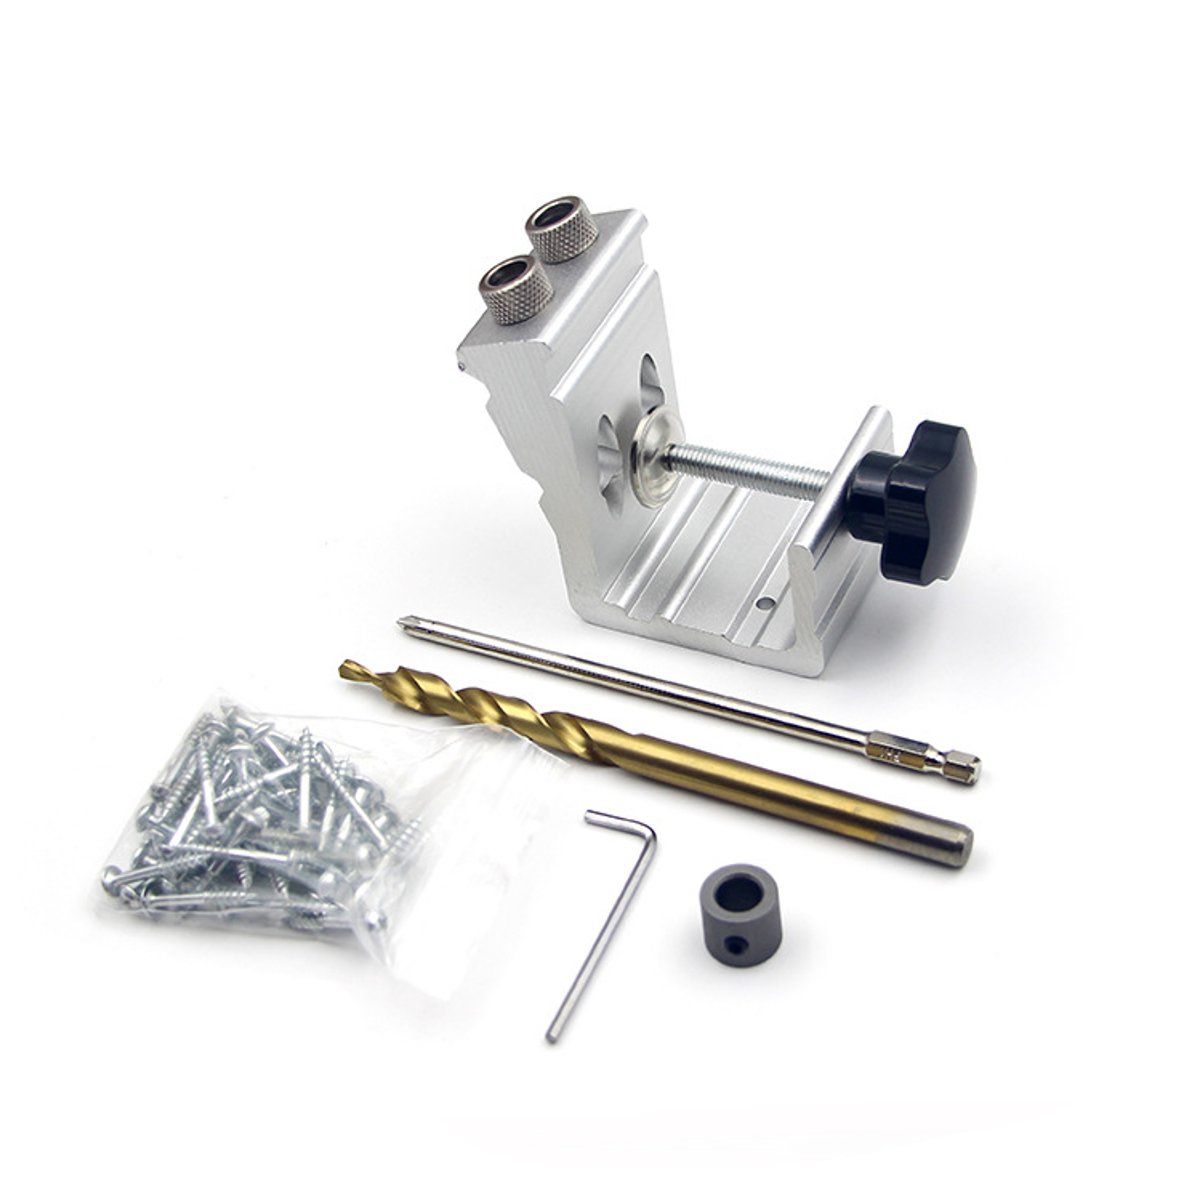 

Pocket Hole Jig Kit Tool System Woodworking Screw Drill Heavy Duty Locator